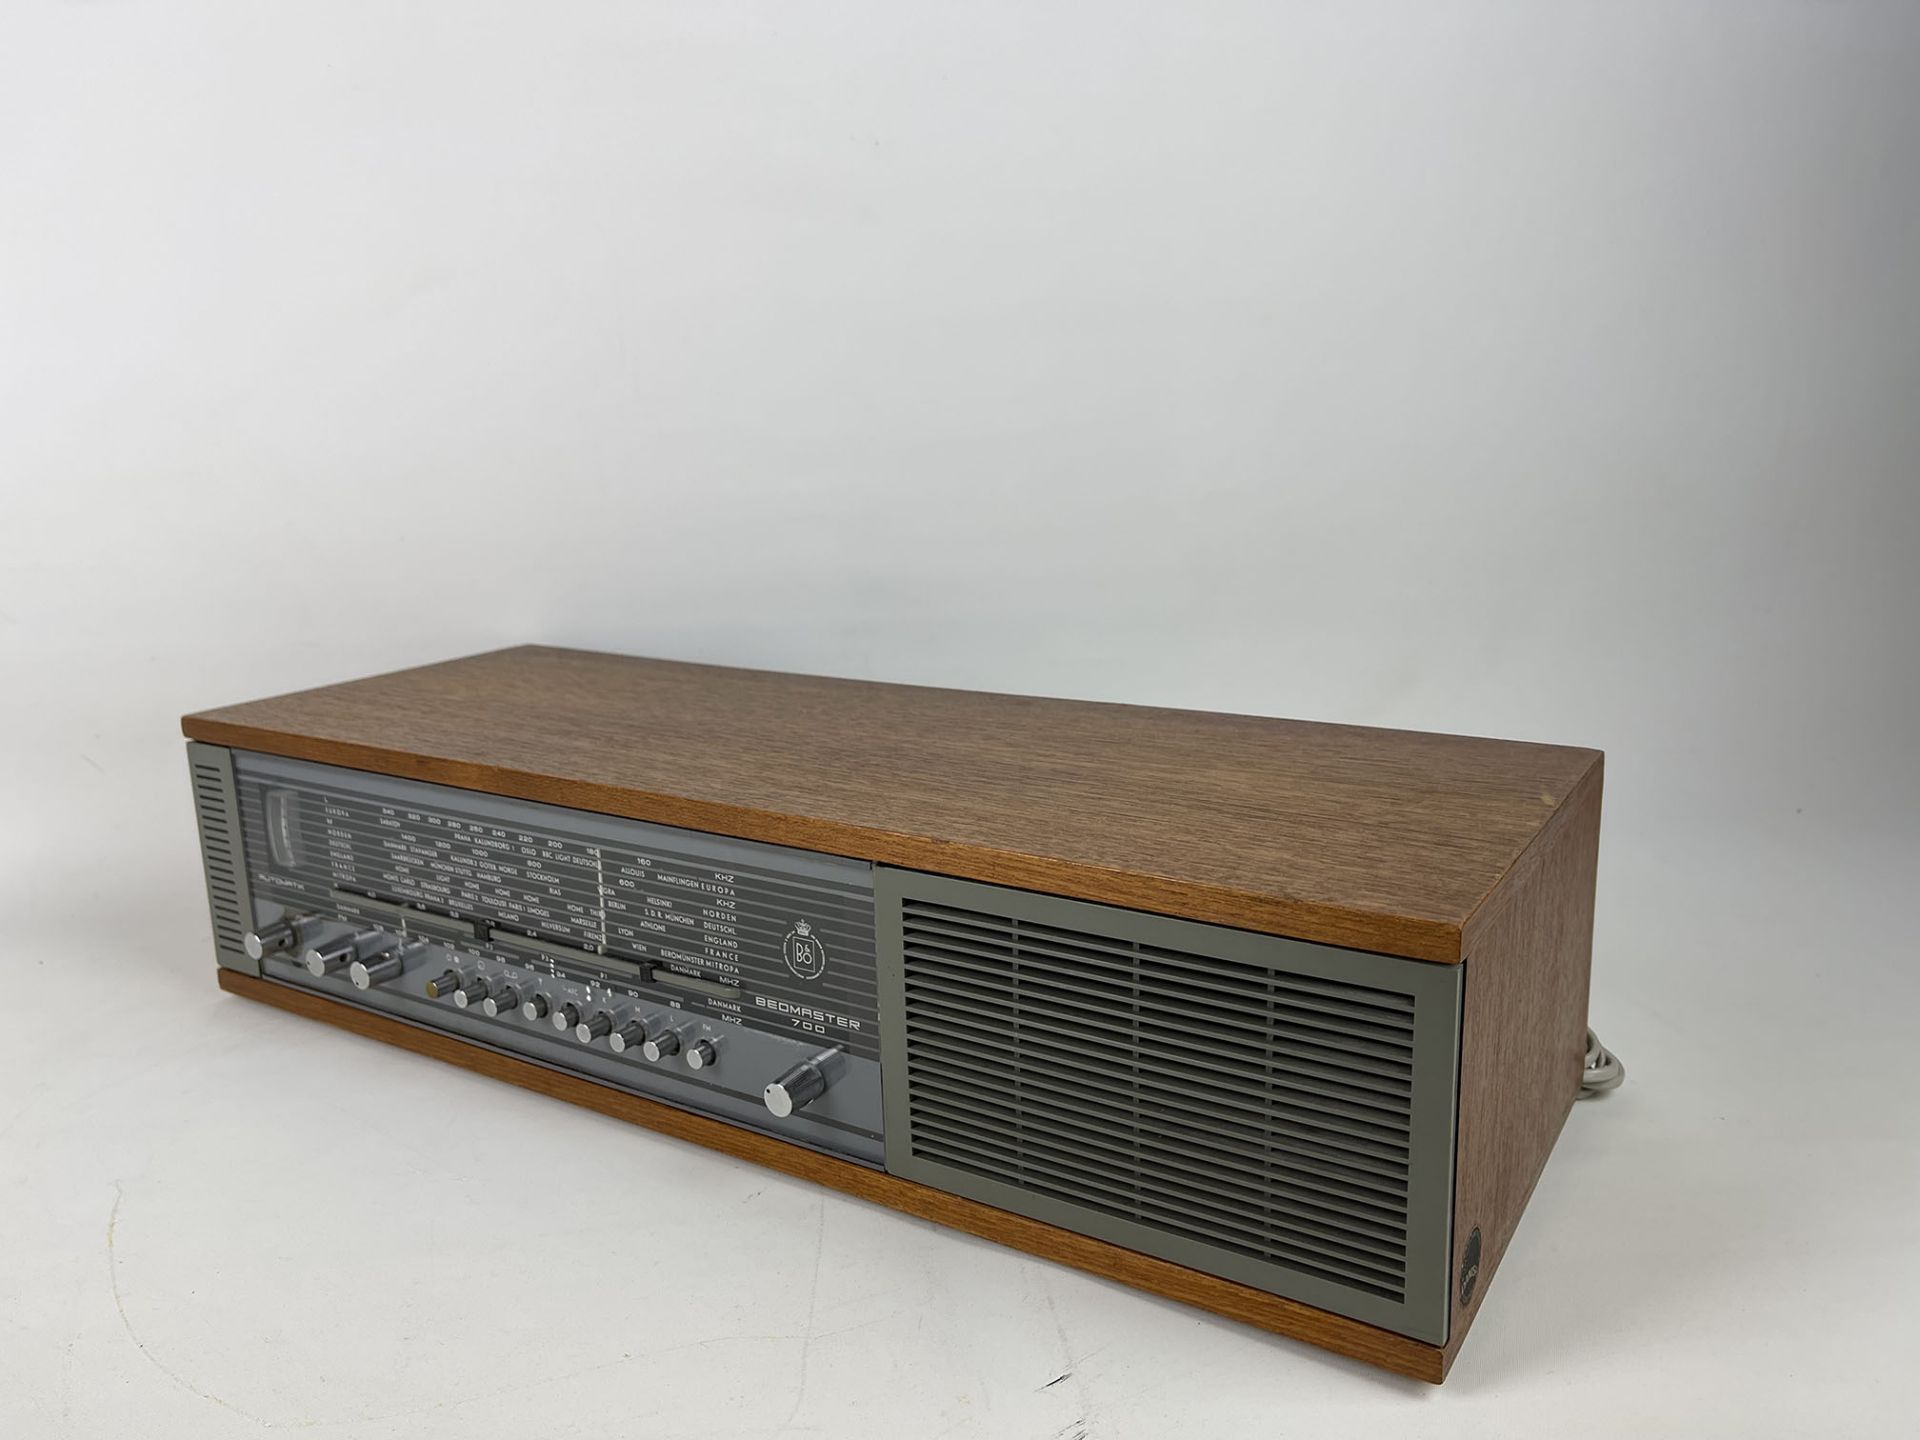 Bang & Olufsen Beomaster 700 Radio, 1969, Denmark - Image 10 of 10